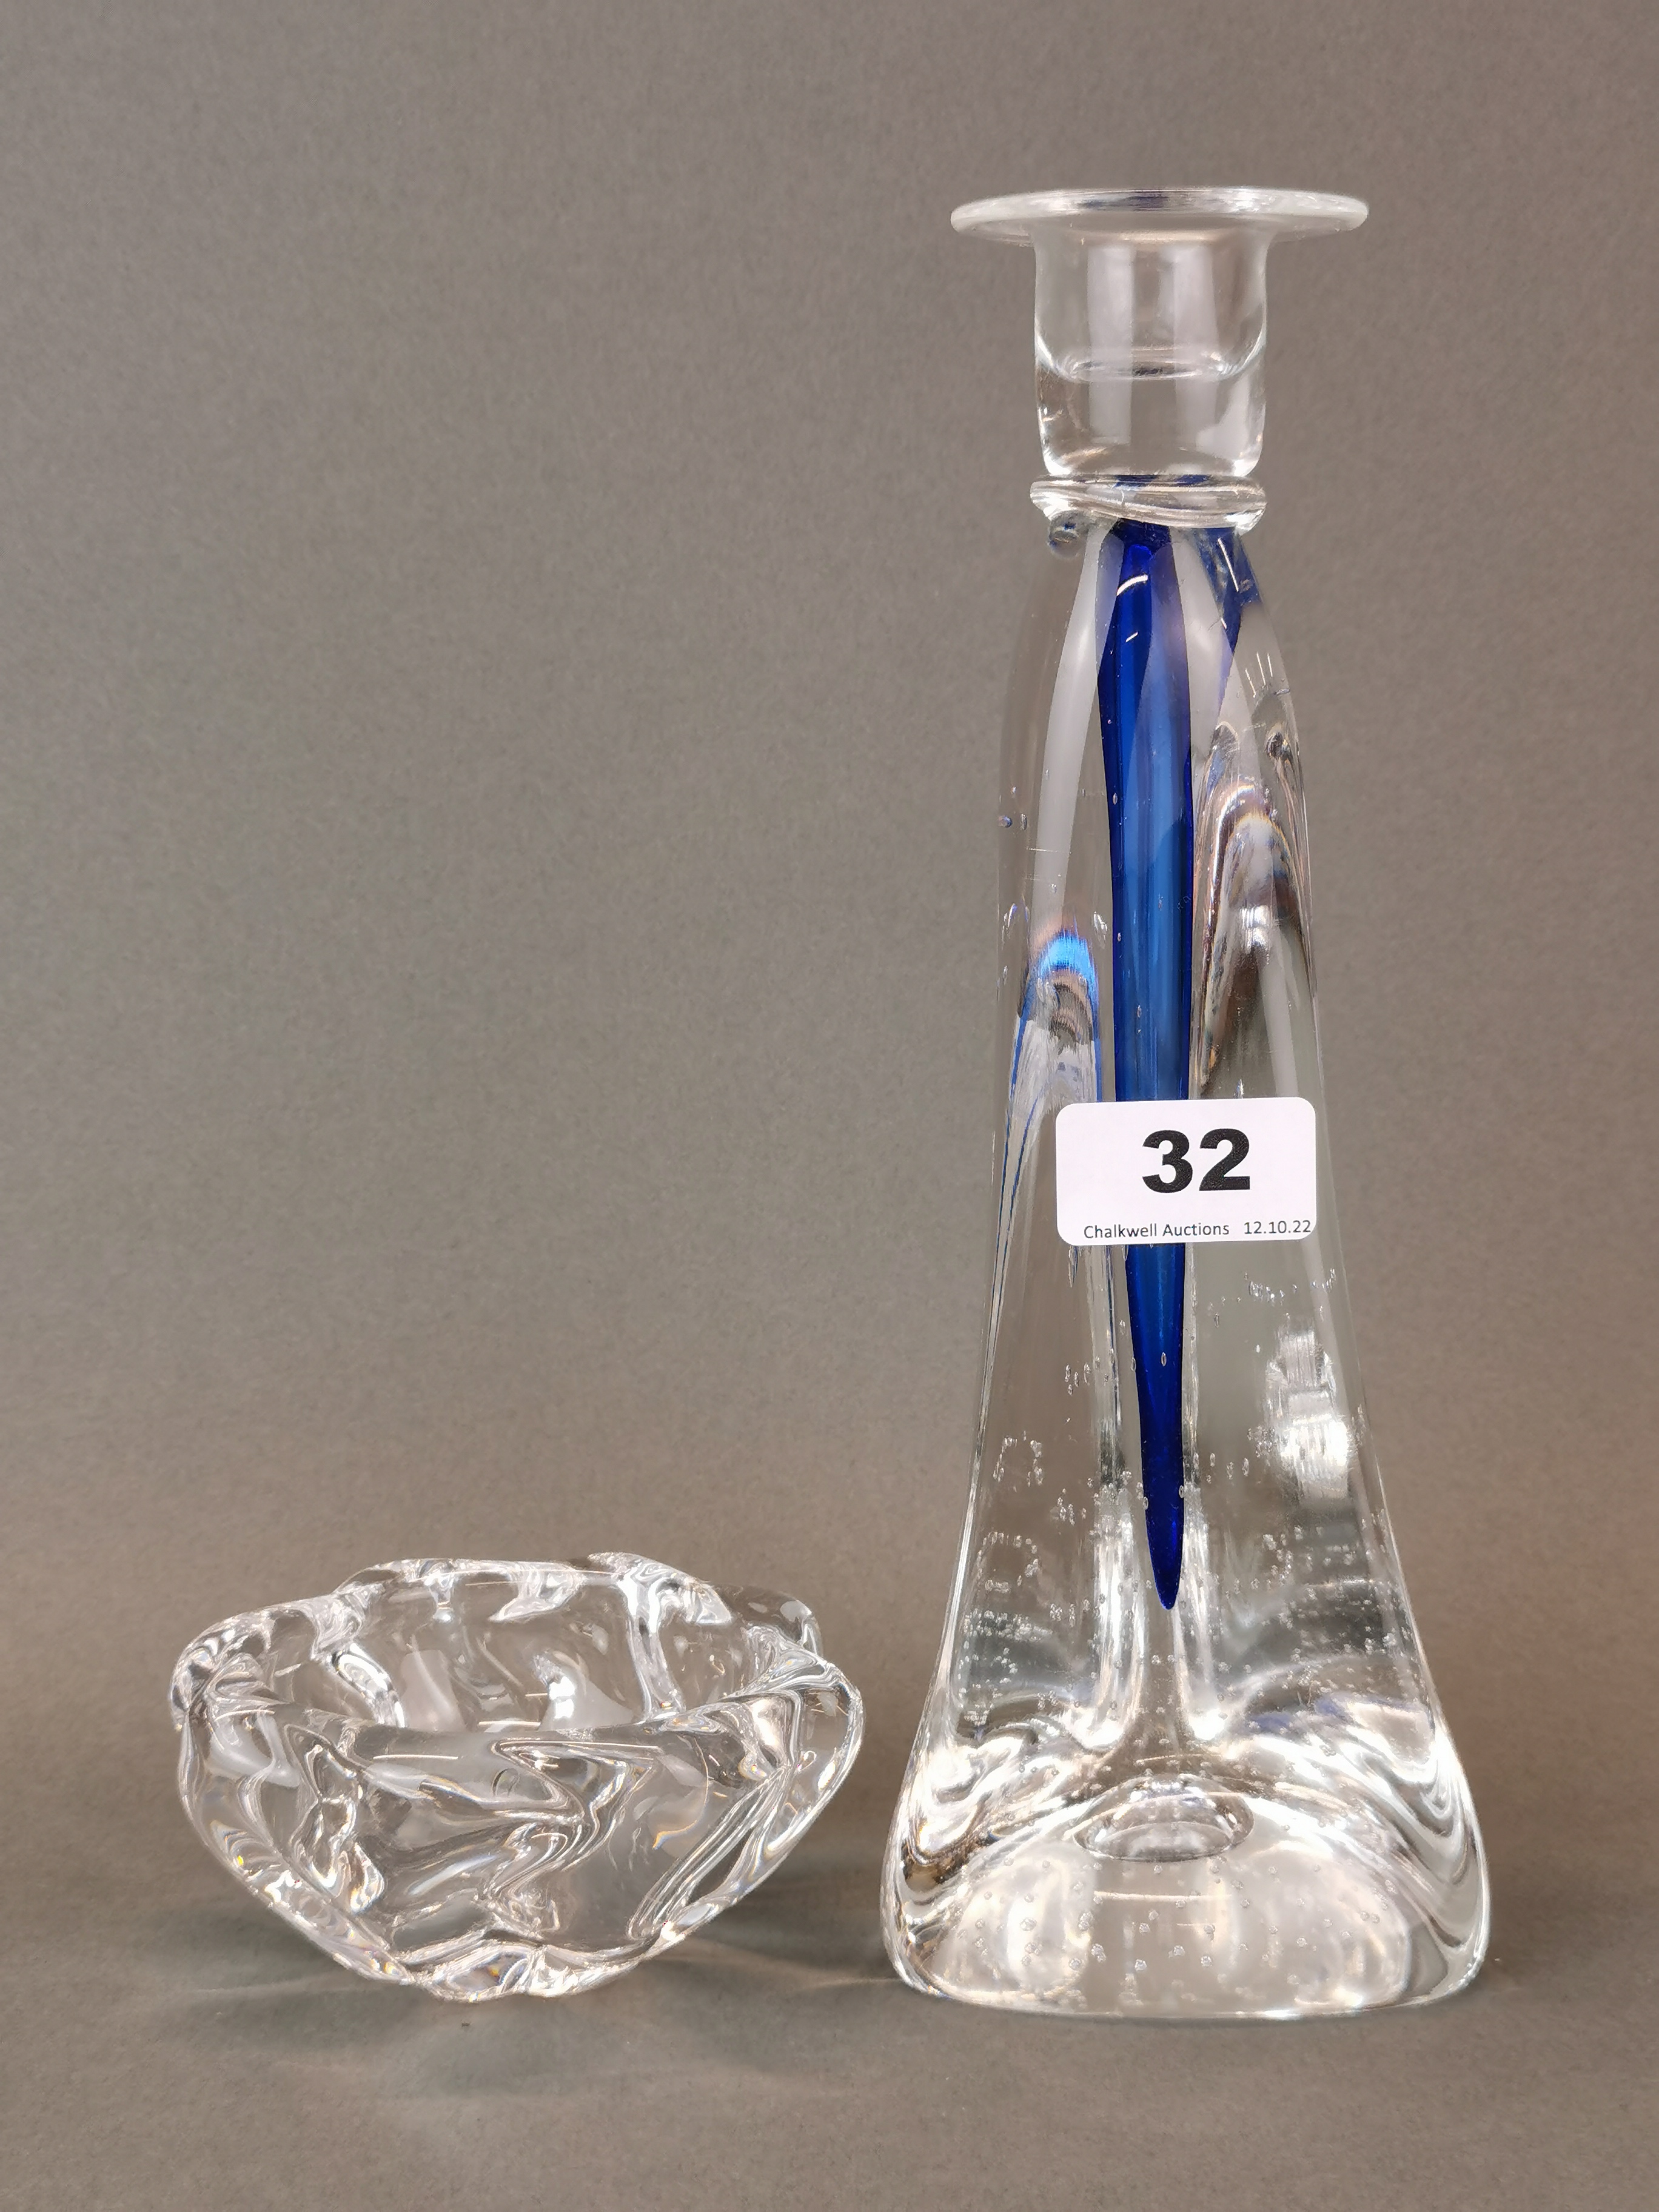 An Adam Jablonski Polish art glass candlestick, H. 26cm. Together with a signed Daum crystal bowl.